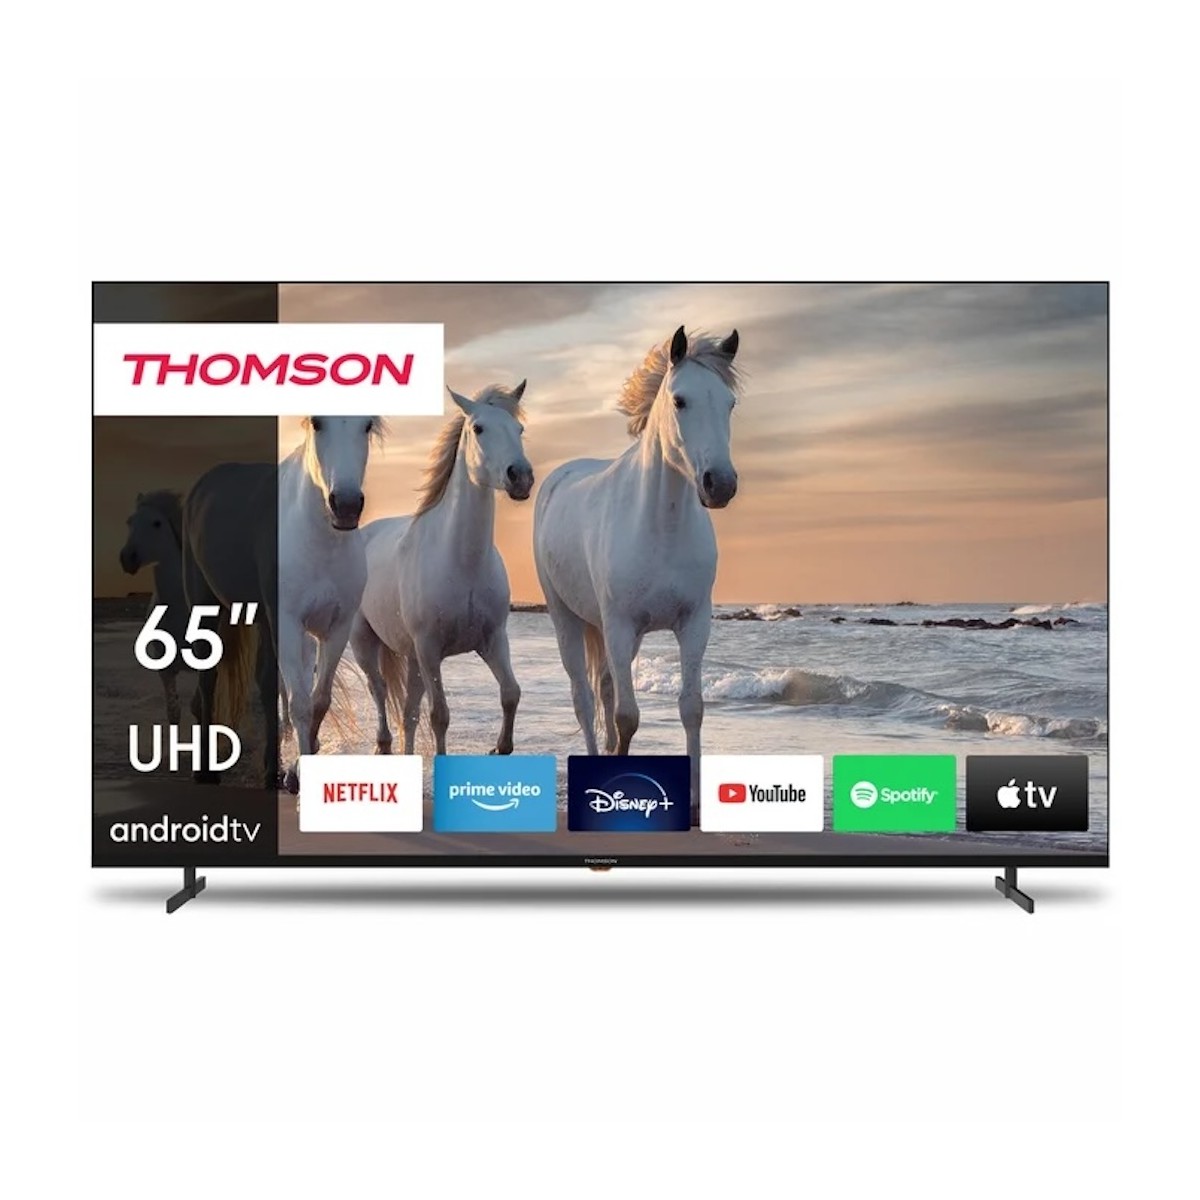 THOMSON ANDROID 65UA5S13 televizors - 65" UHD